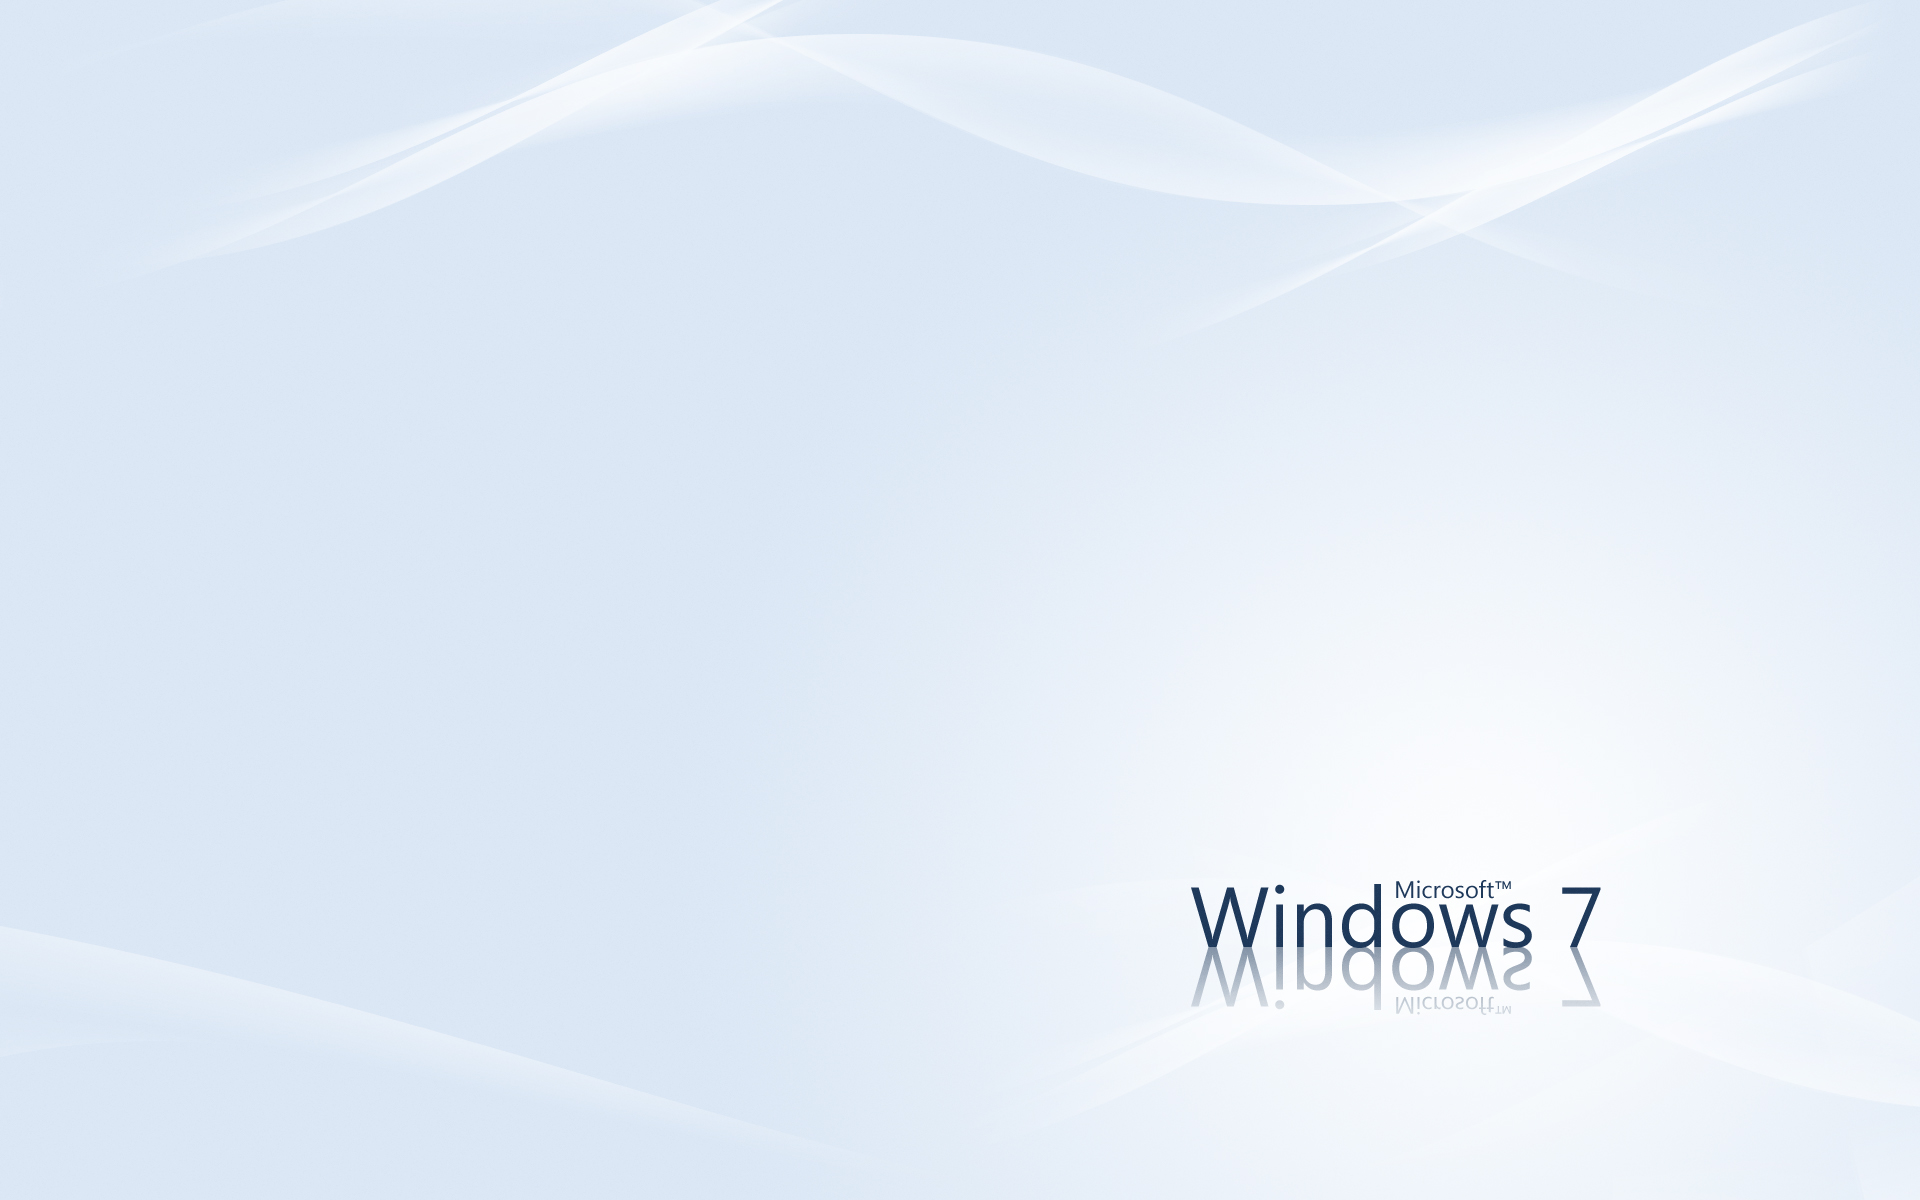 Windows_7_ultimate_08.jpg : 디아블로를 찾아서 Windows 7 바탕화면